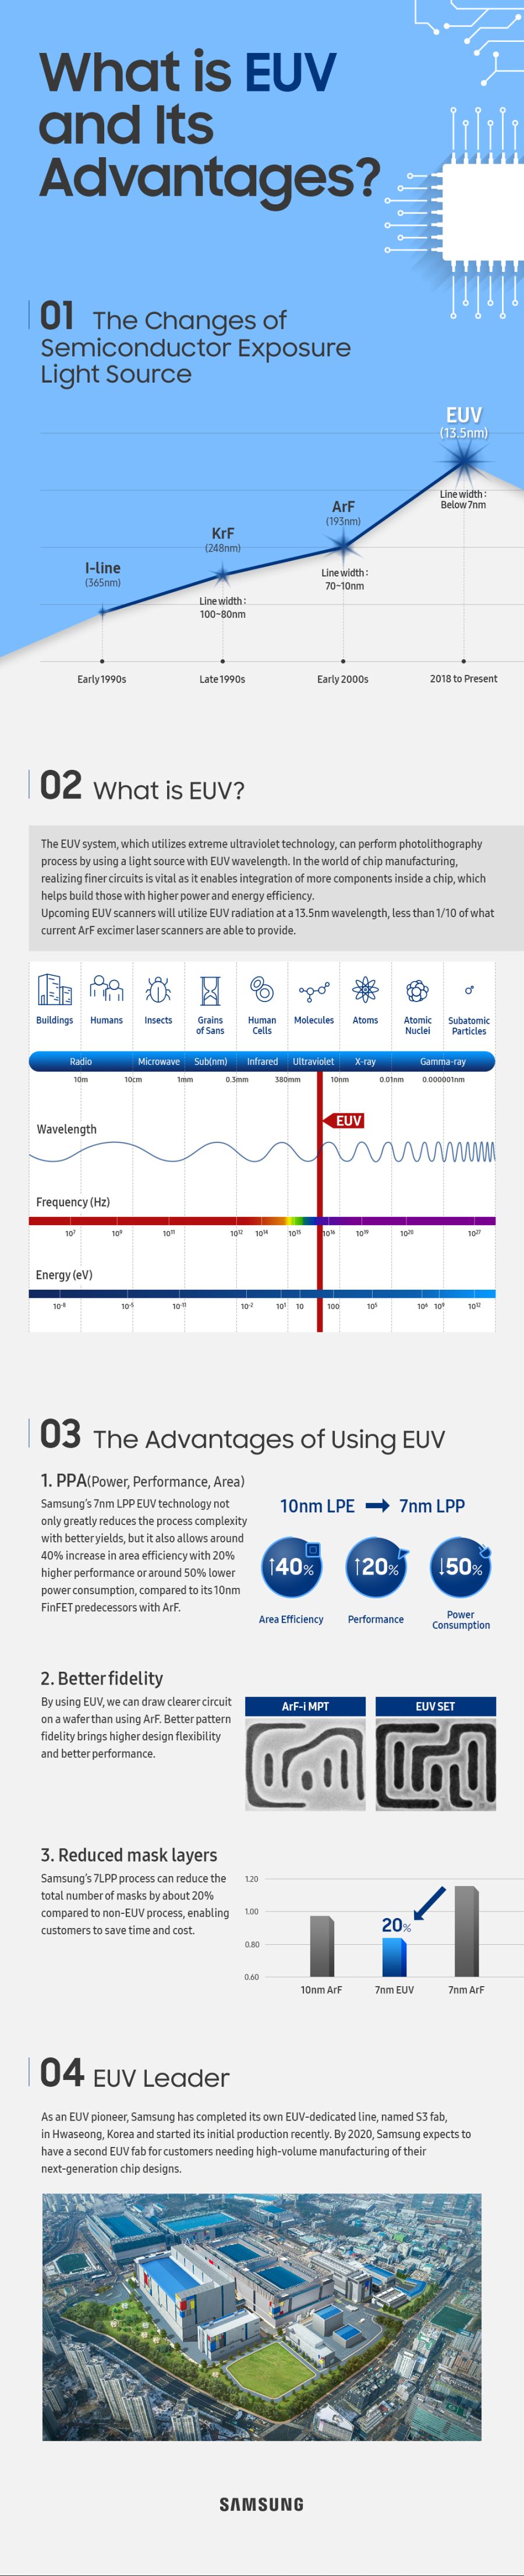 EUV-Infographic.jpg